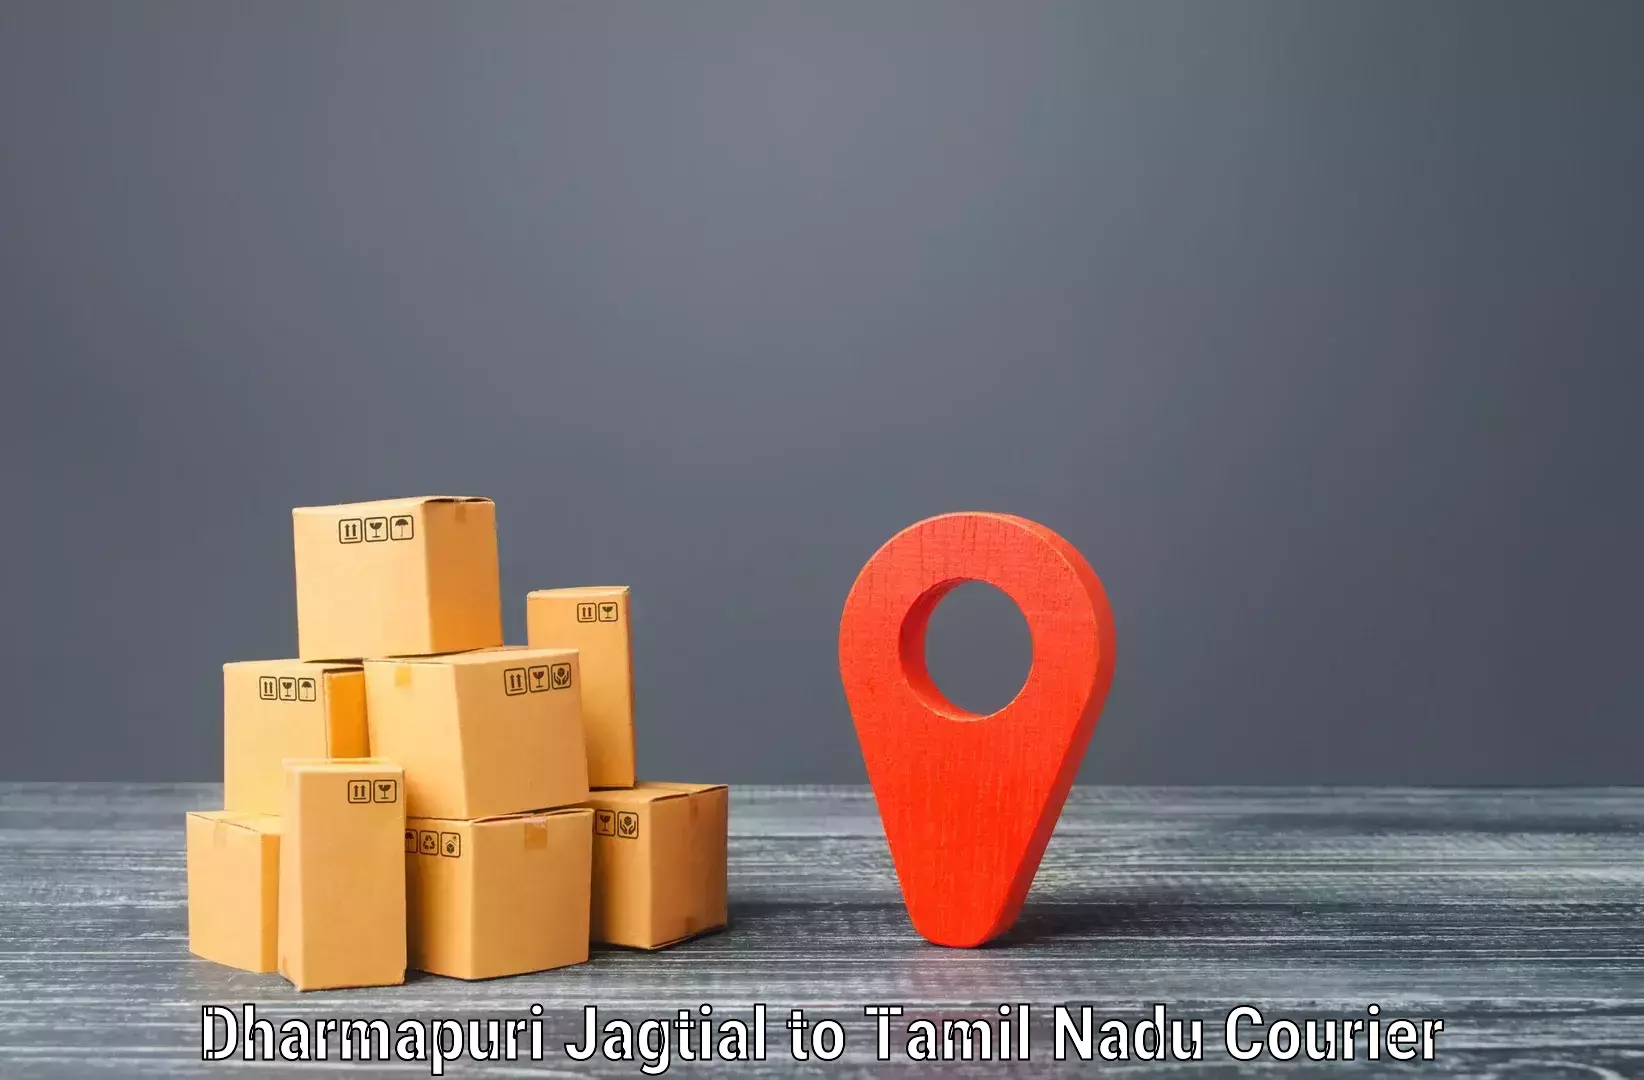 Urgent courier needs Dharmapuri Jagtial to Perambur